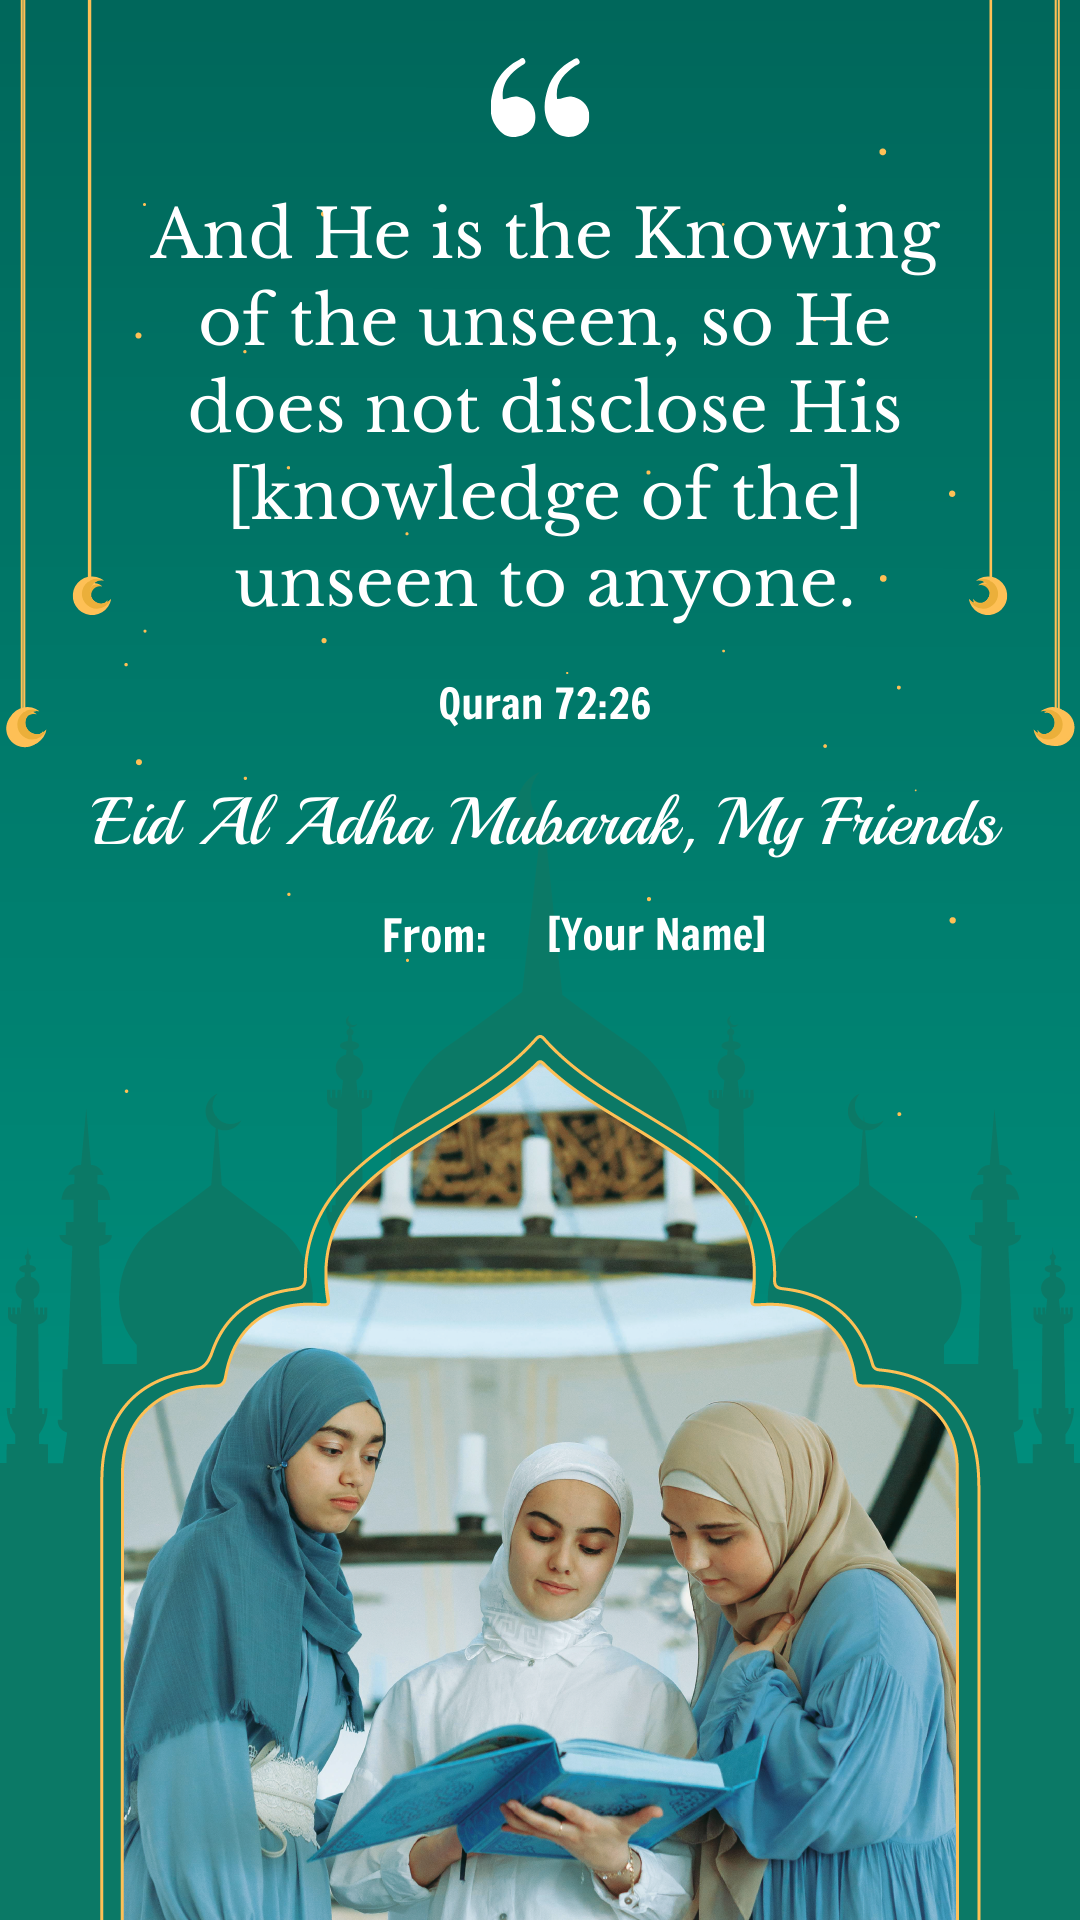 Eid Al Adha Quote for Friends